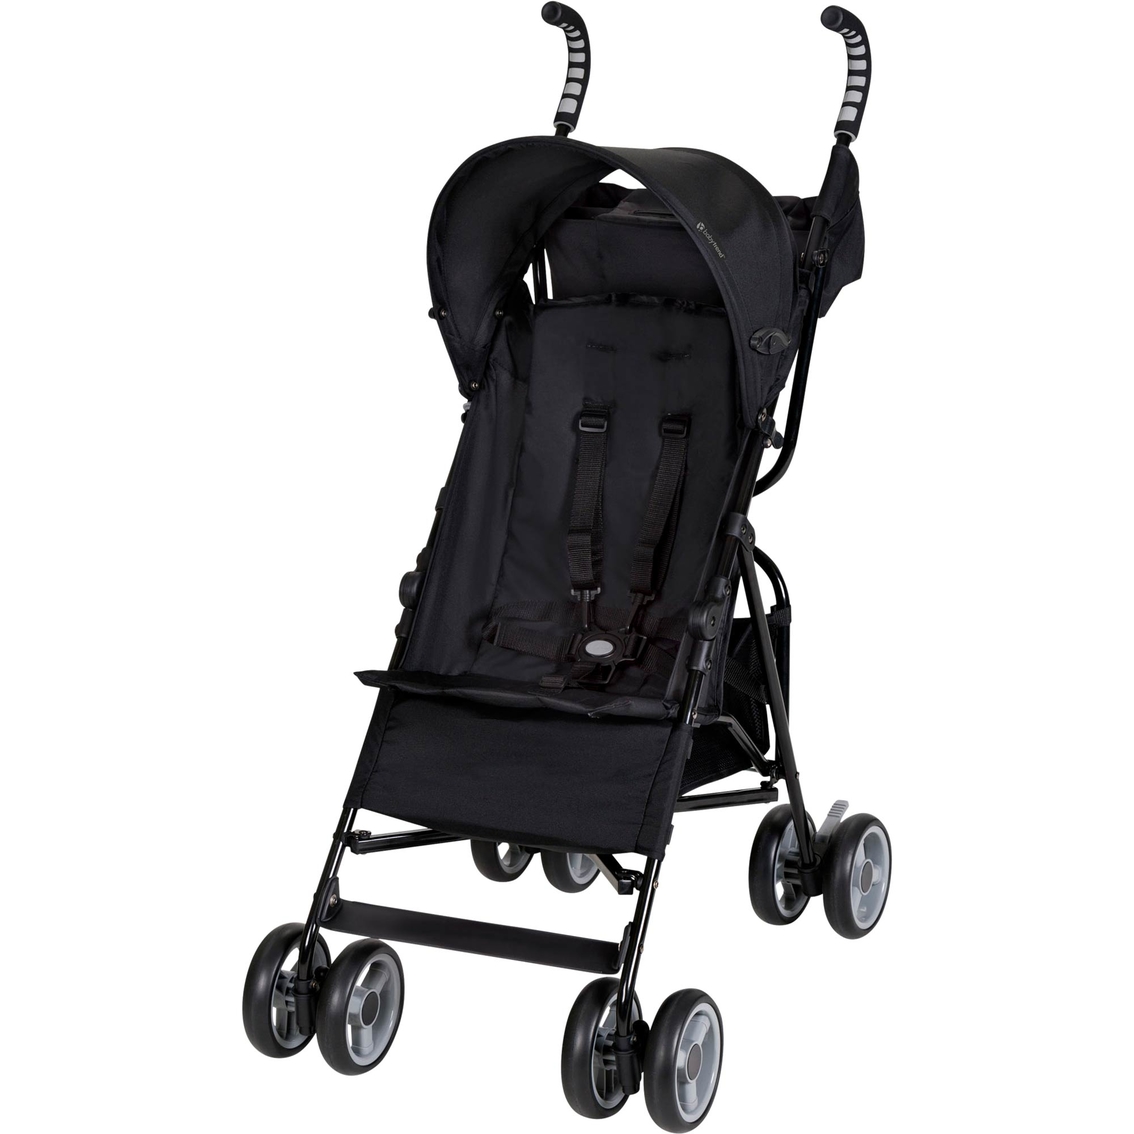 Baby Trend Rocket Stroller - Image 1 of 4